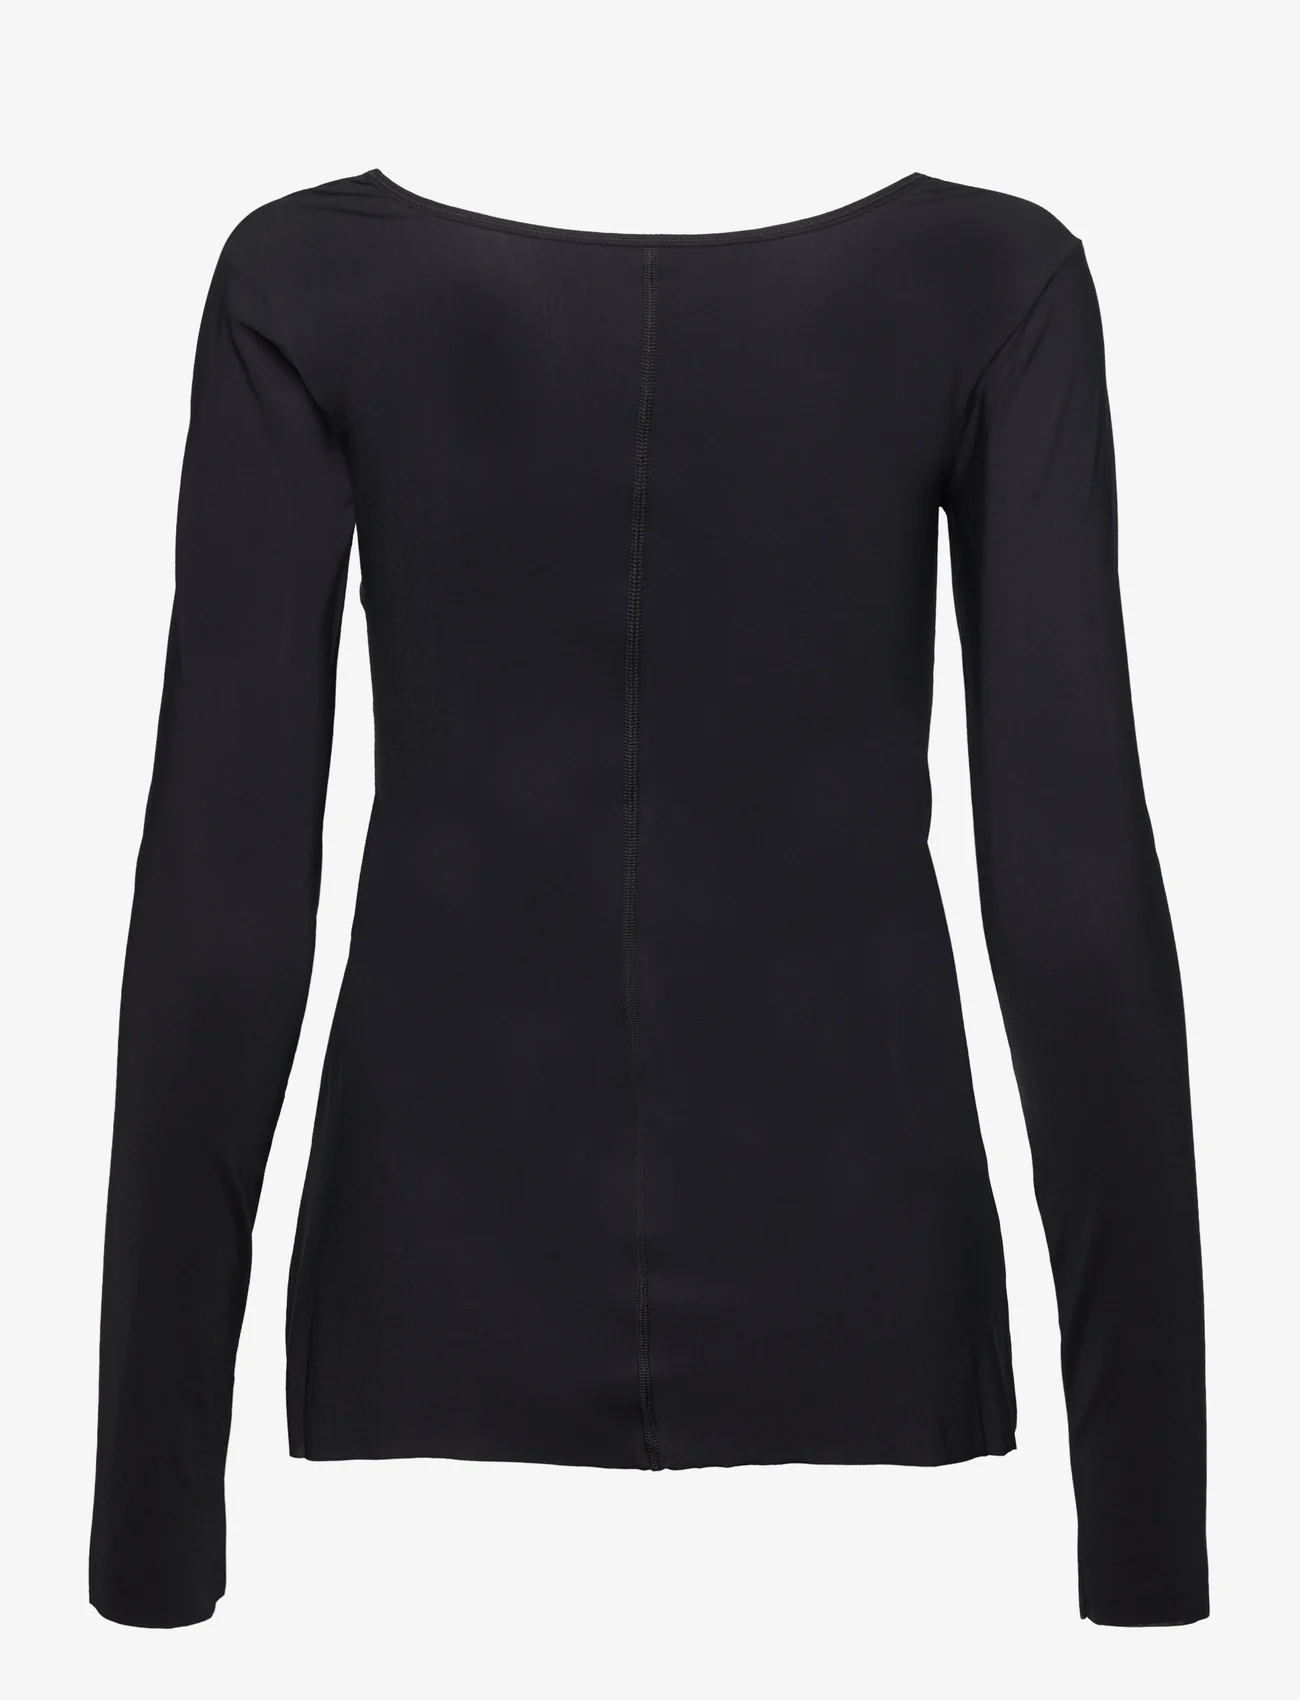 Filippa K - Dance Layer Top - long-sleeved tops - black - 1